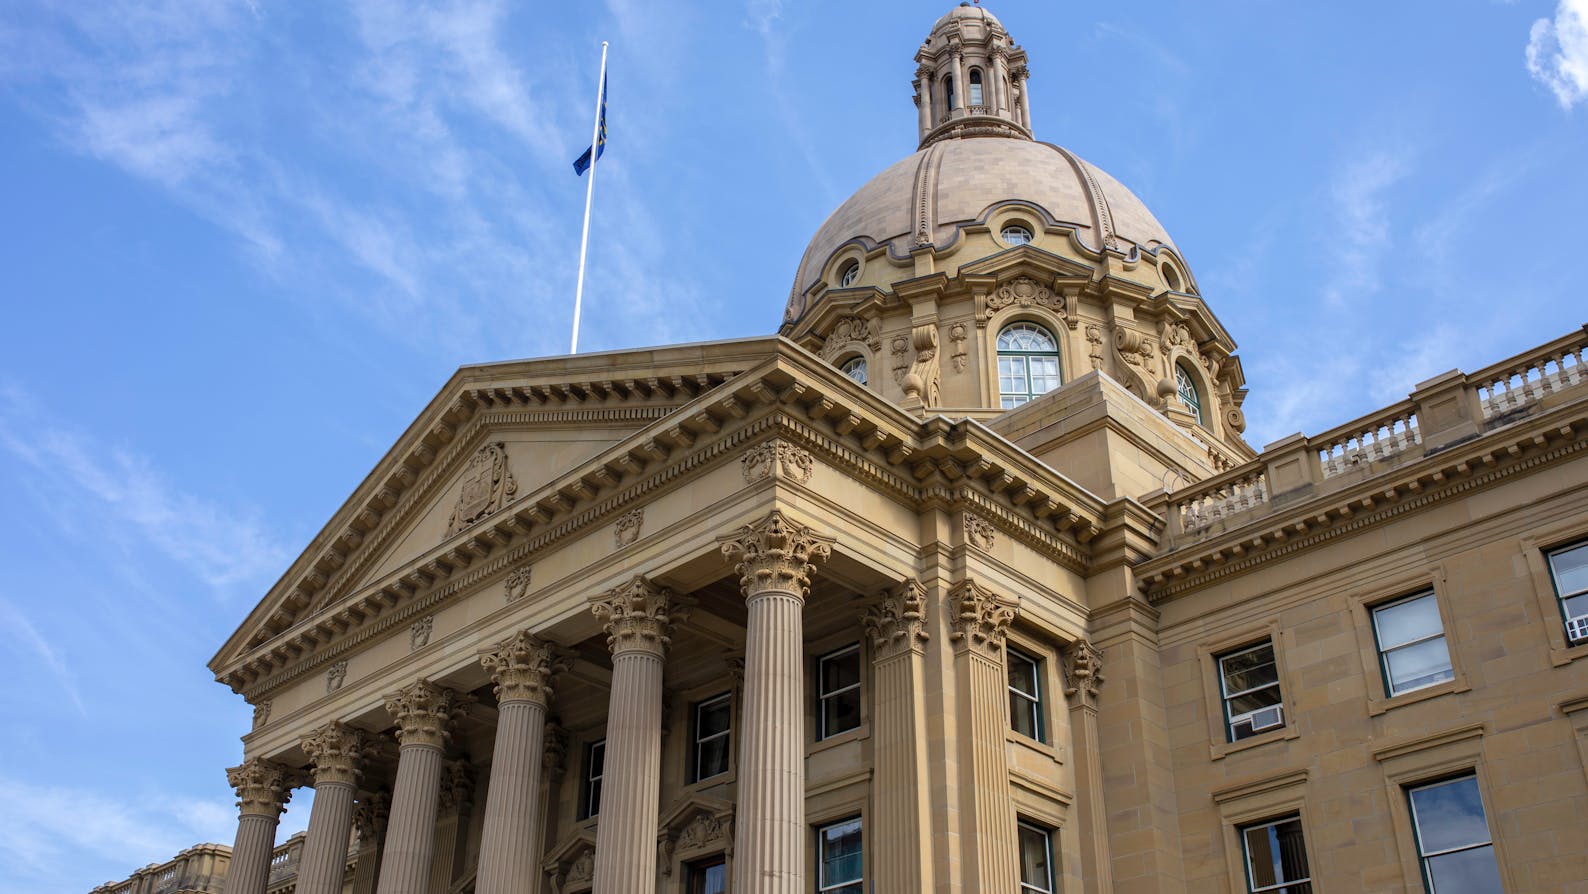 Alberta Legislature building from low perspective against blue sky